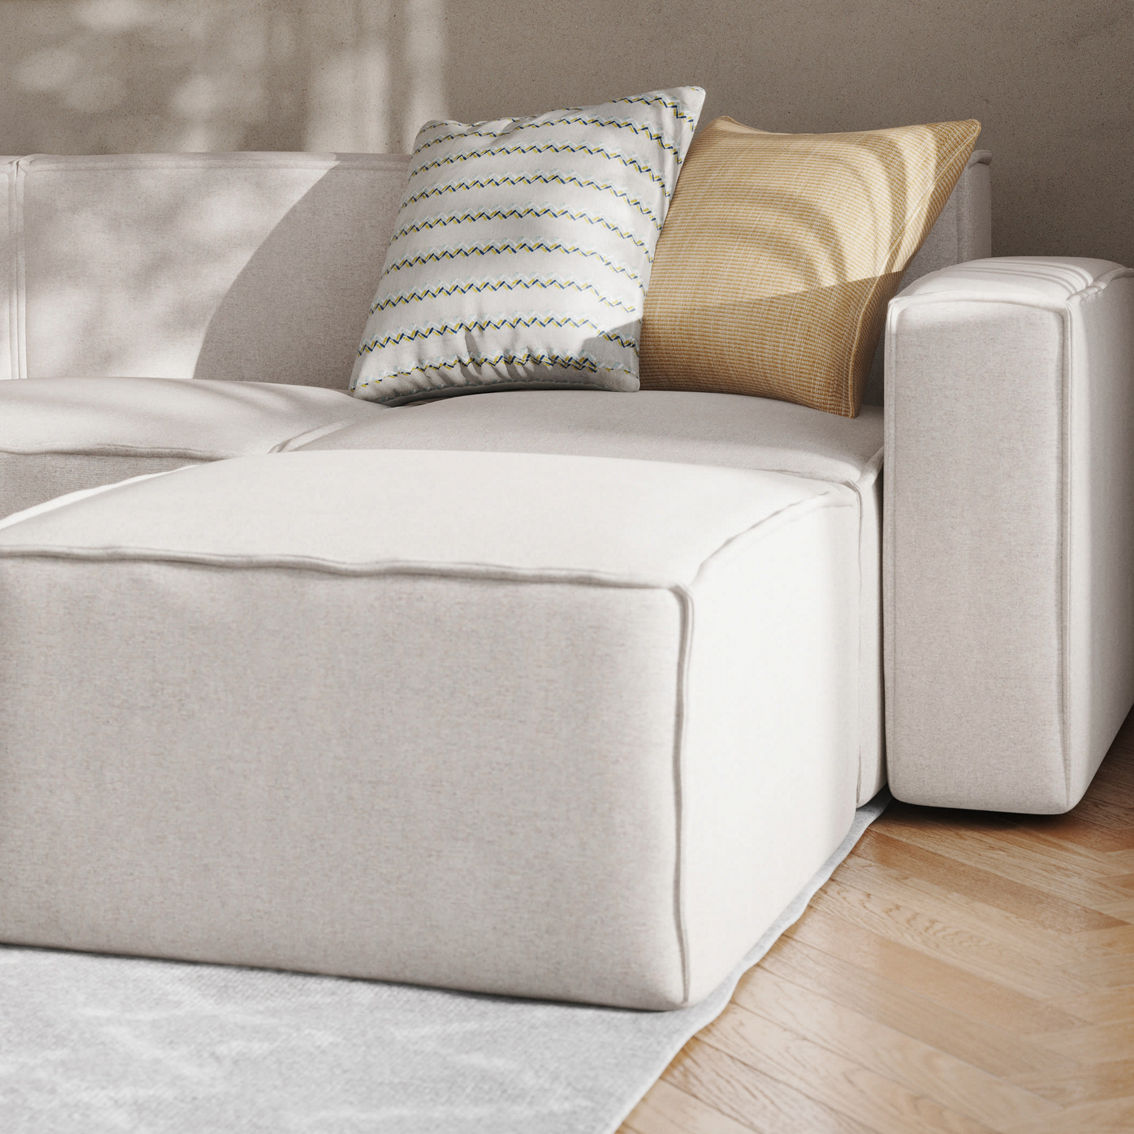 Flash Furniture 5 Piece Modular Sectional Sofa with Ottoman - Image 3 of 5